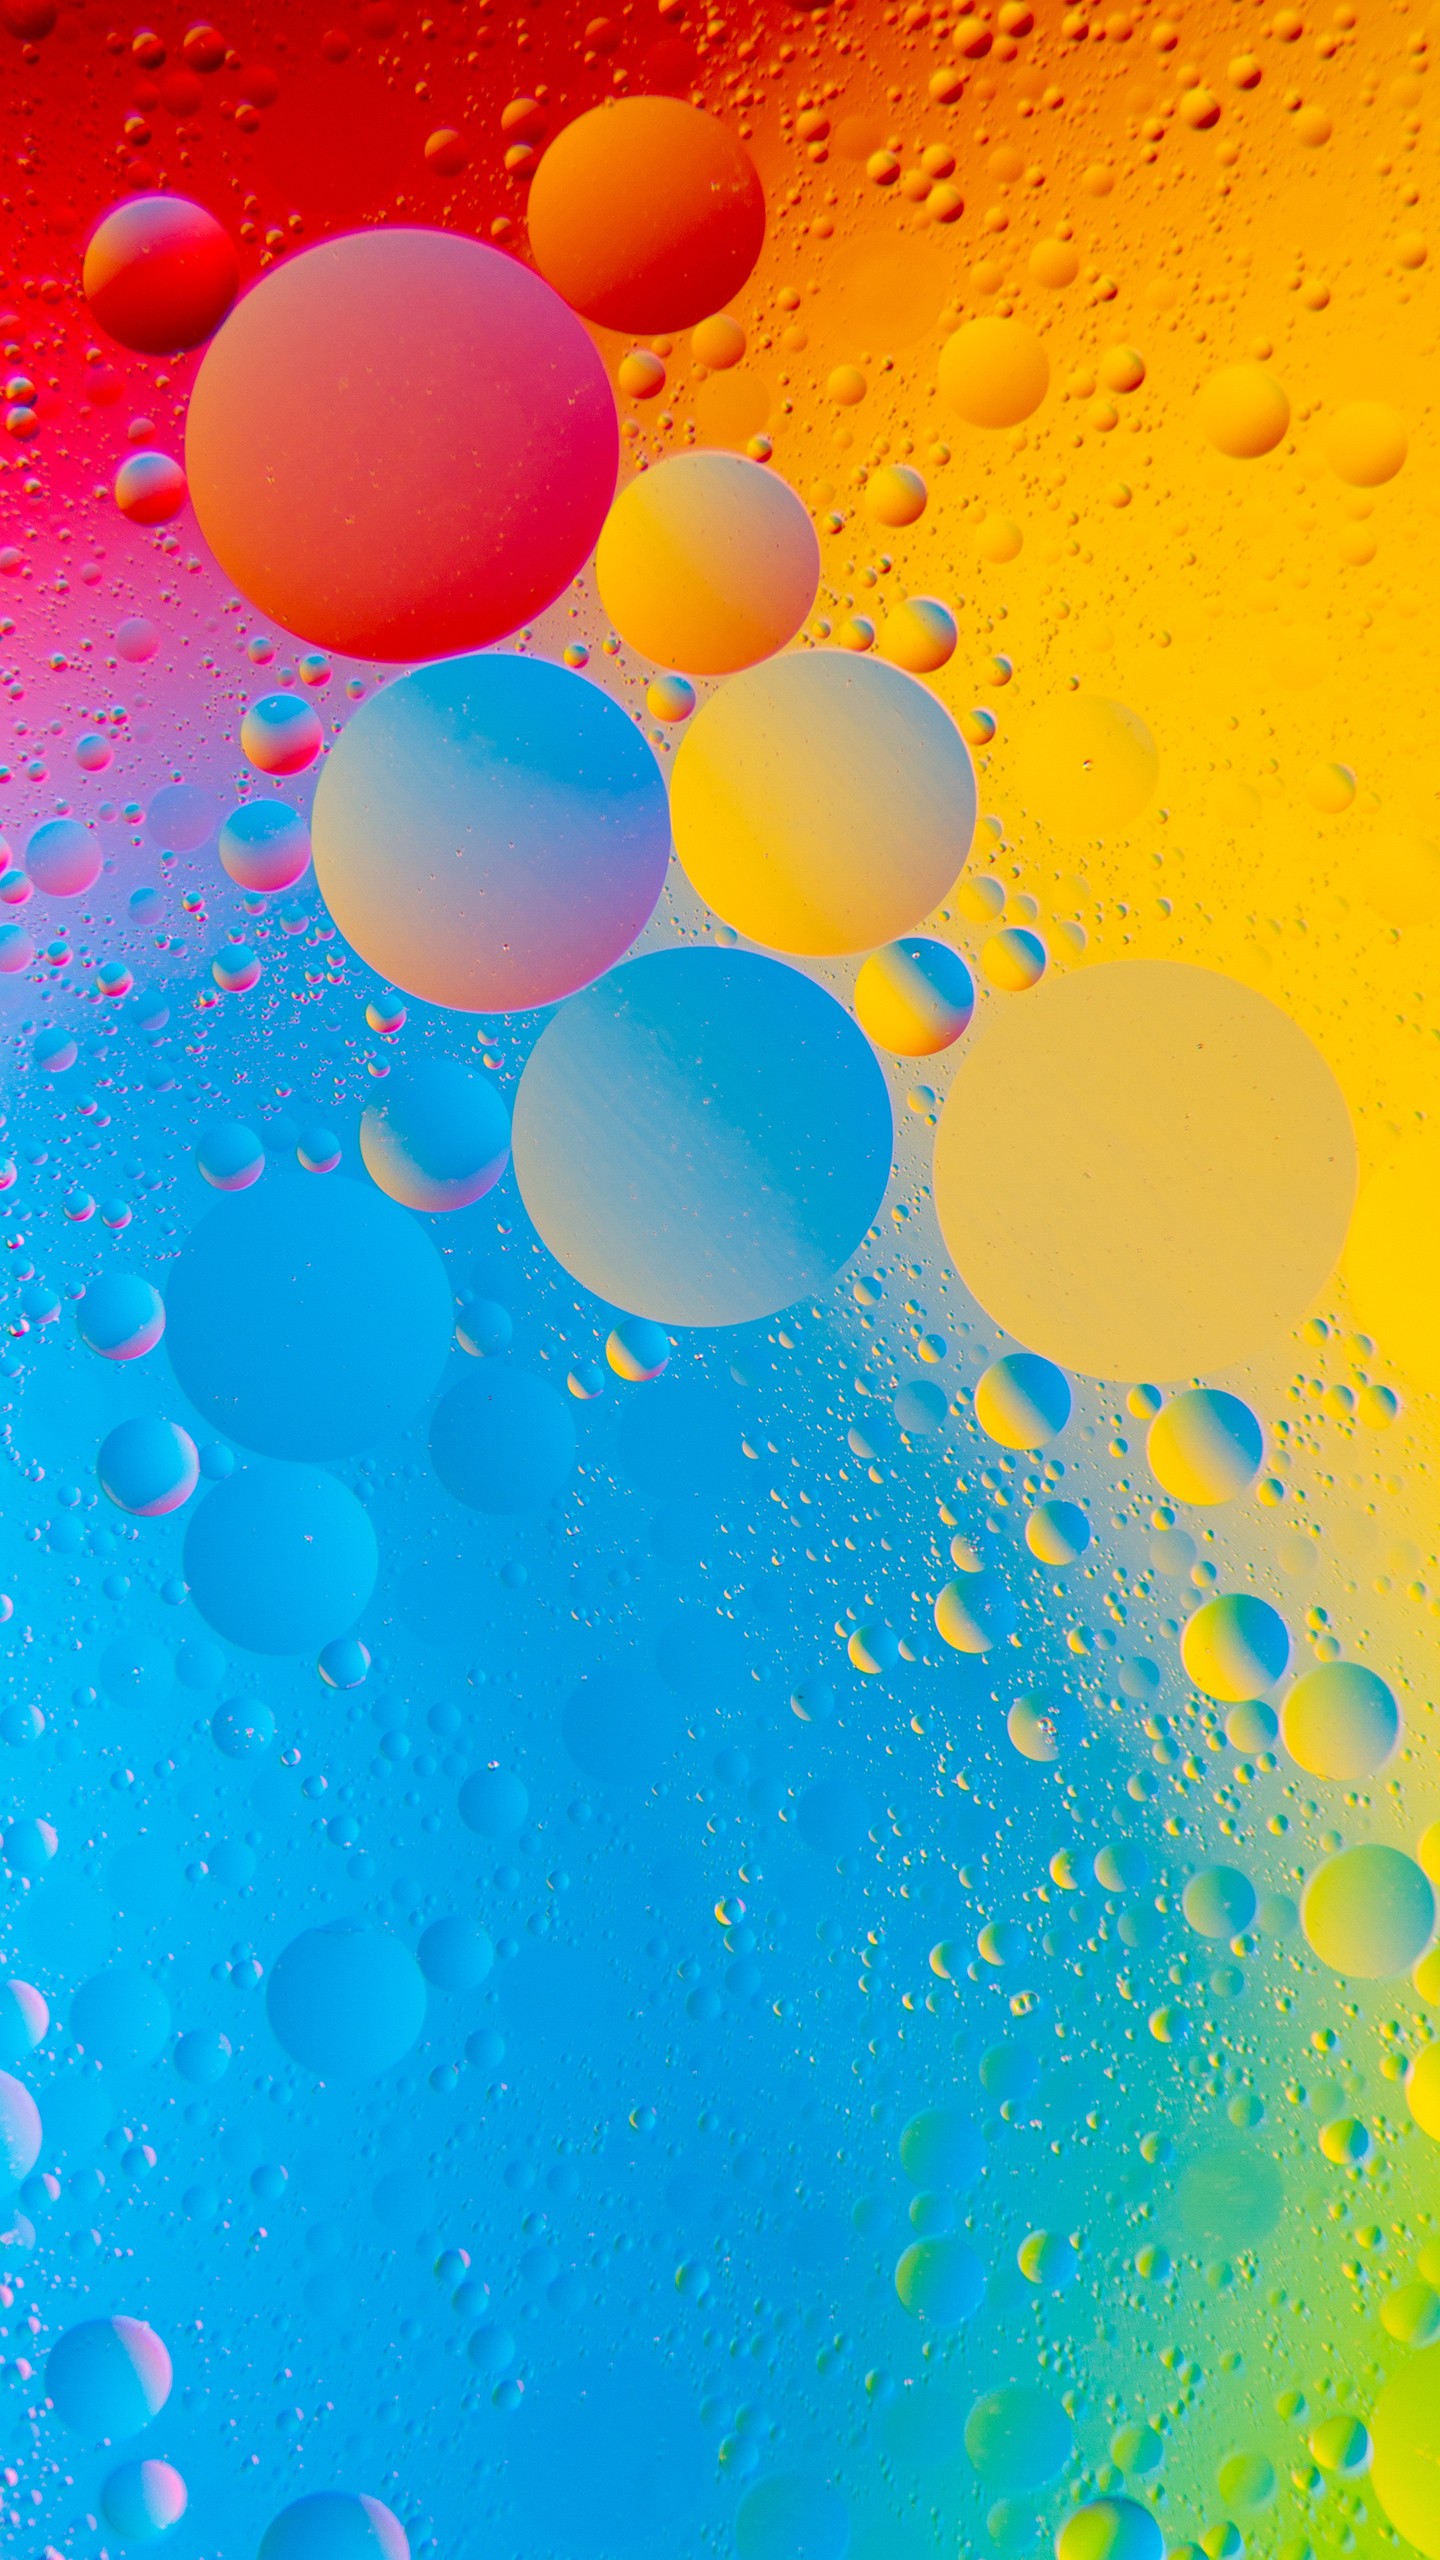 qhd wallpaper,blue,balloon,water,orange,yellow